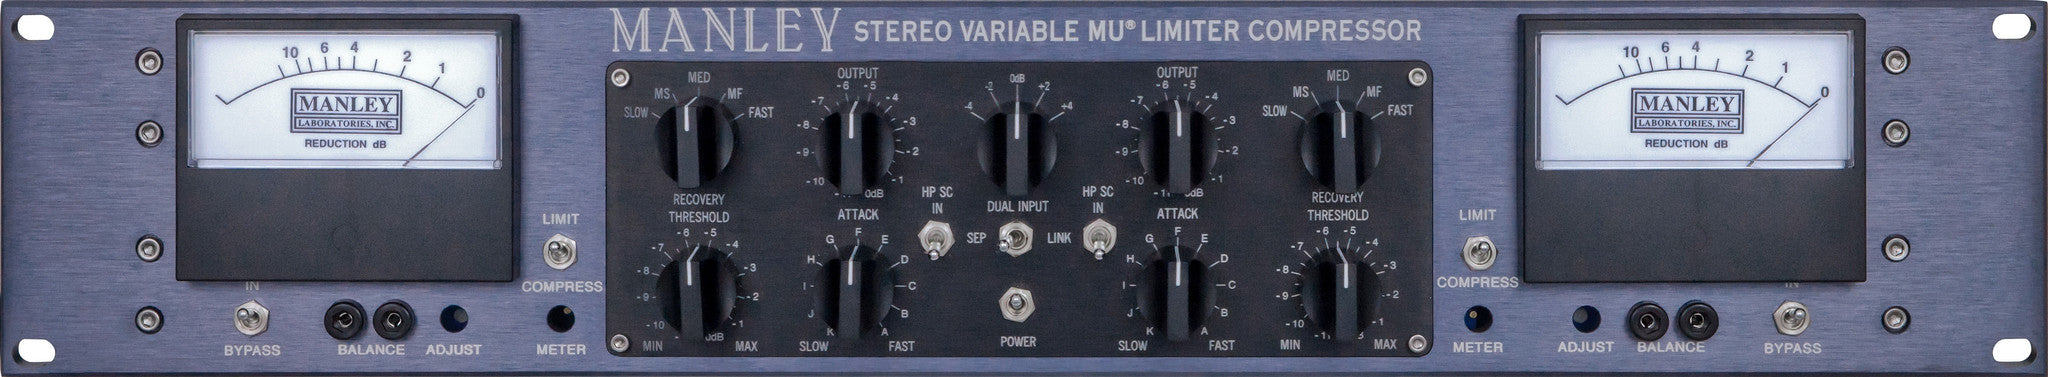 Recording Equipment - Manley - Manley Mastering Stereo Vari-Mu Limiter Compressor - Professional Audio Design, Inc